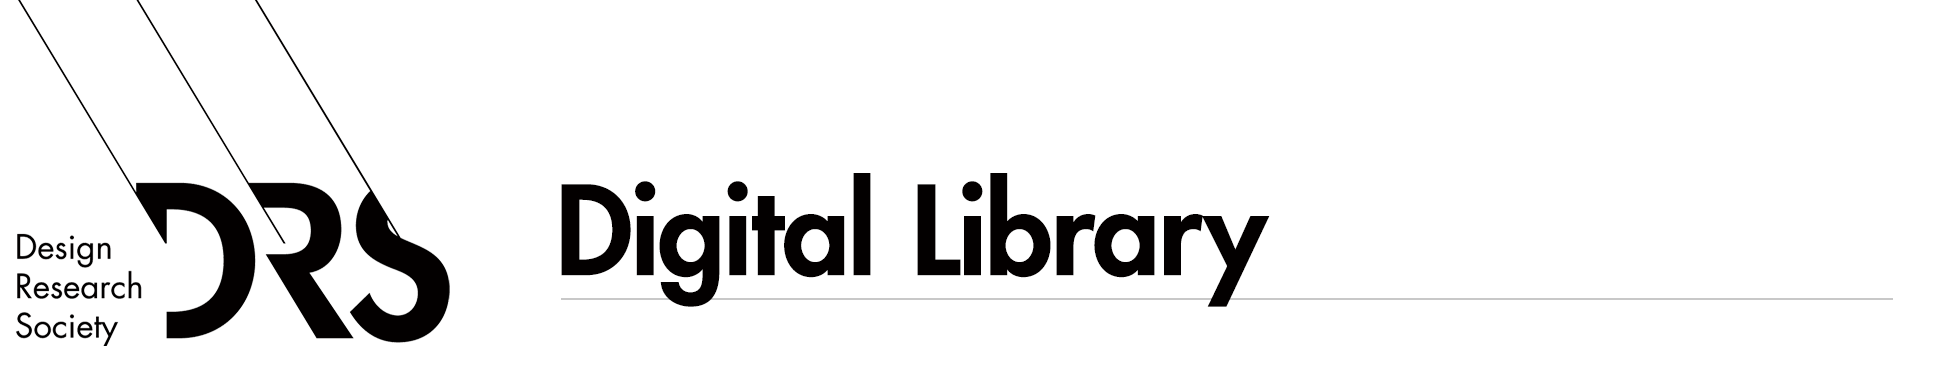 DRS Digital Library